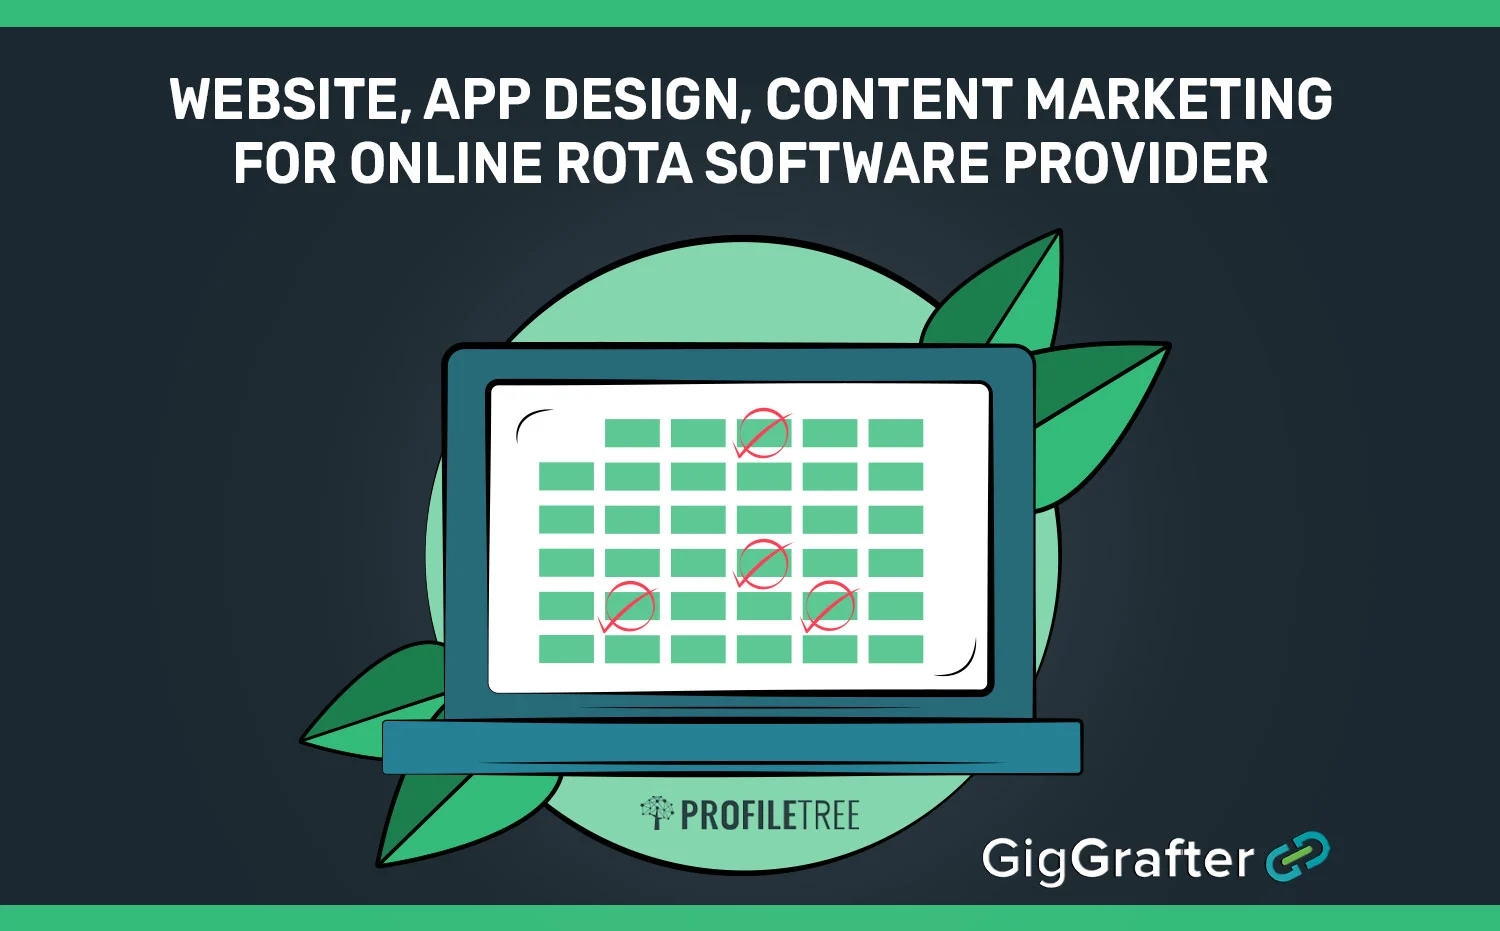 Website App Design and Content Marketing for Online Rota Software Provider